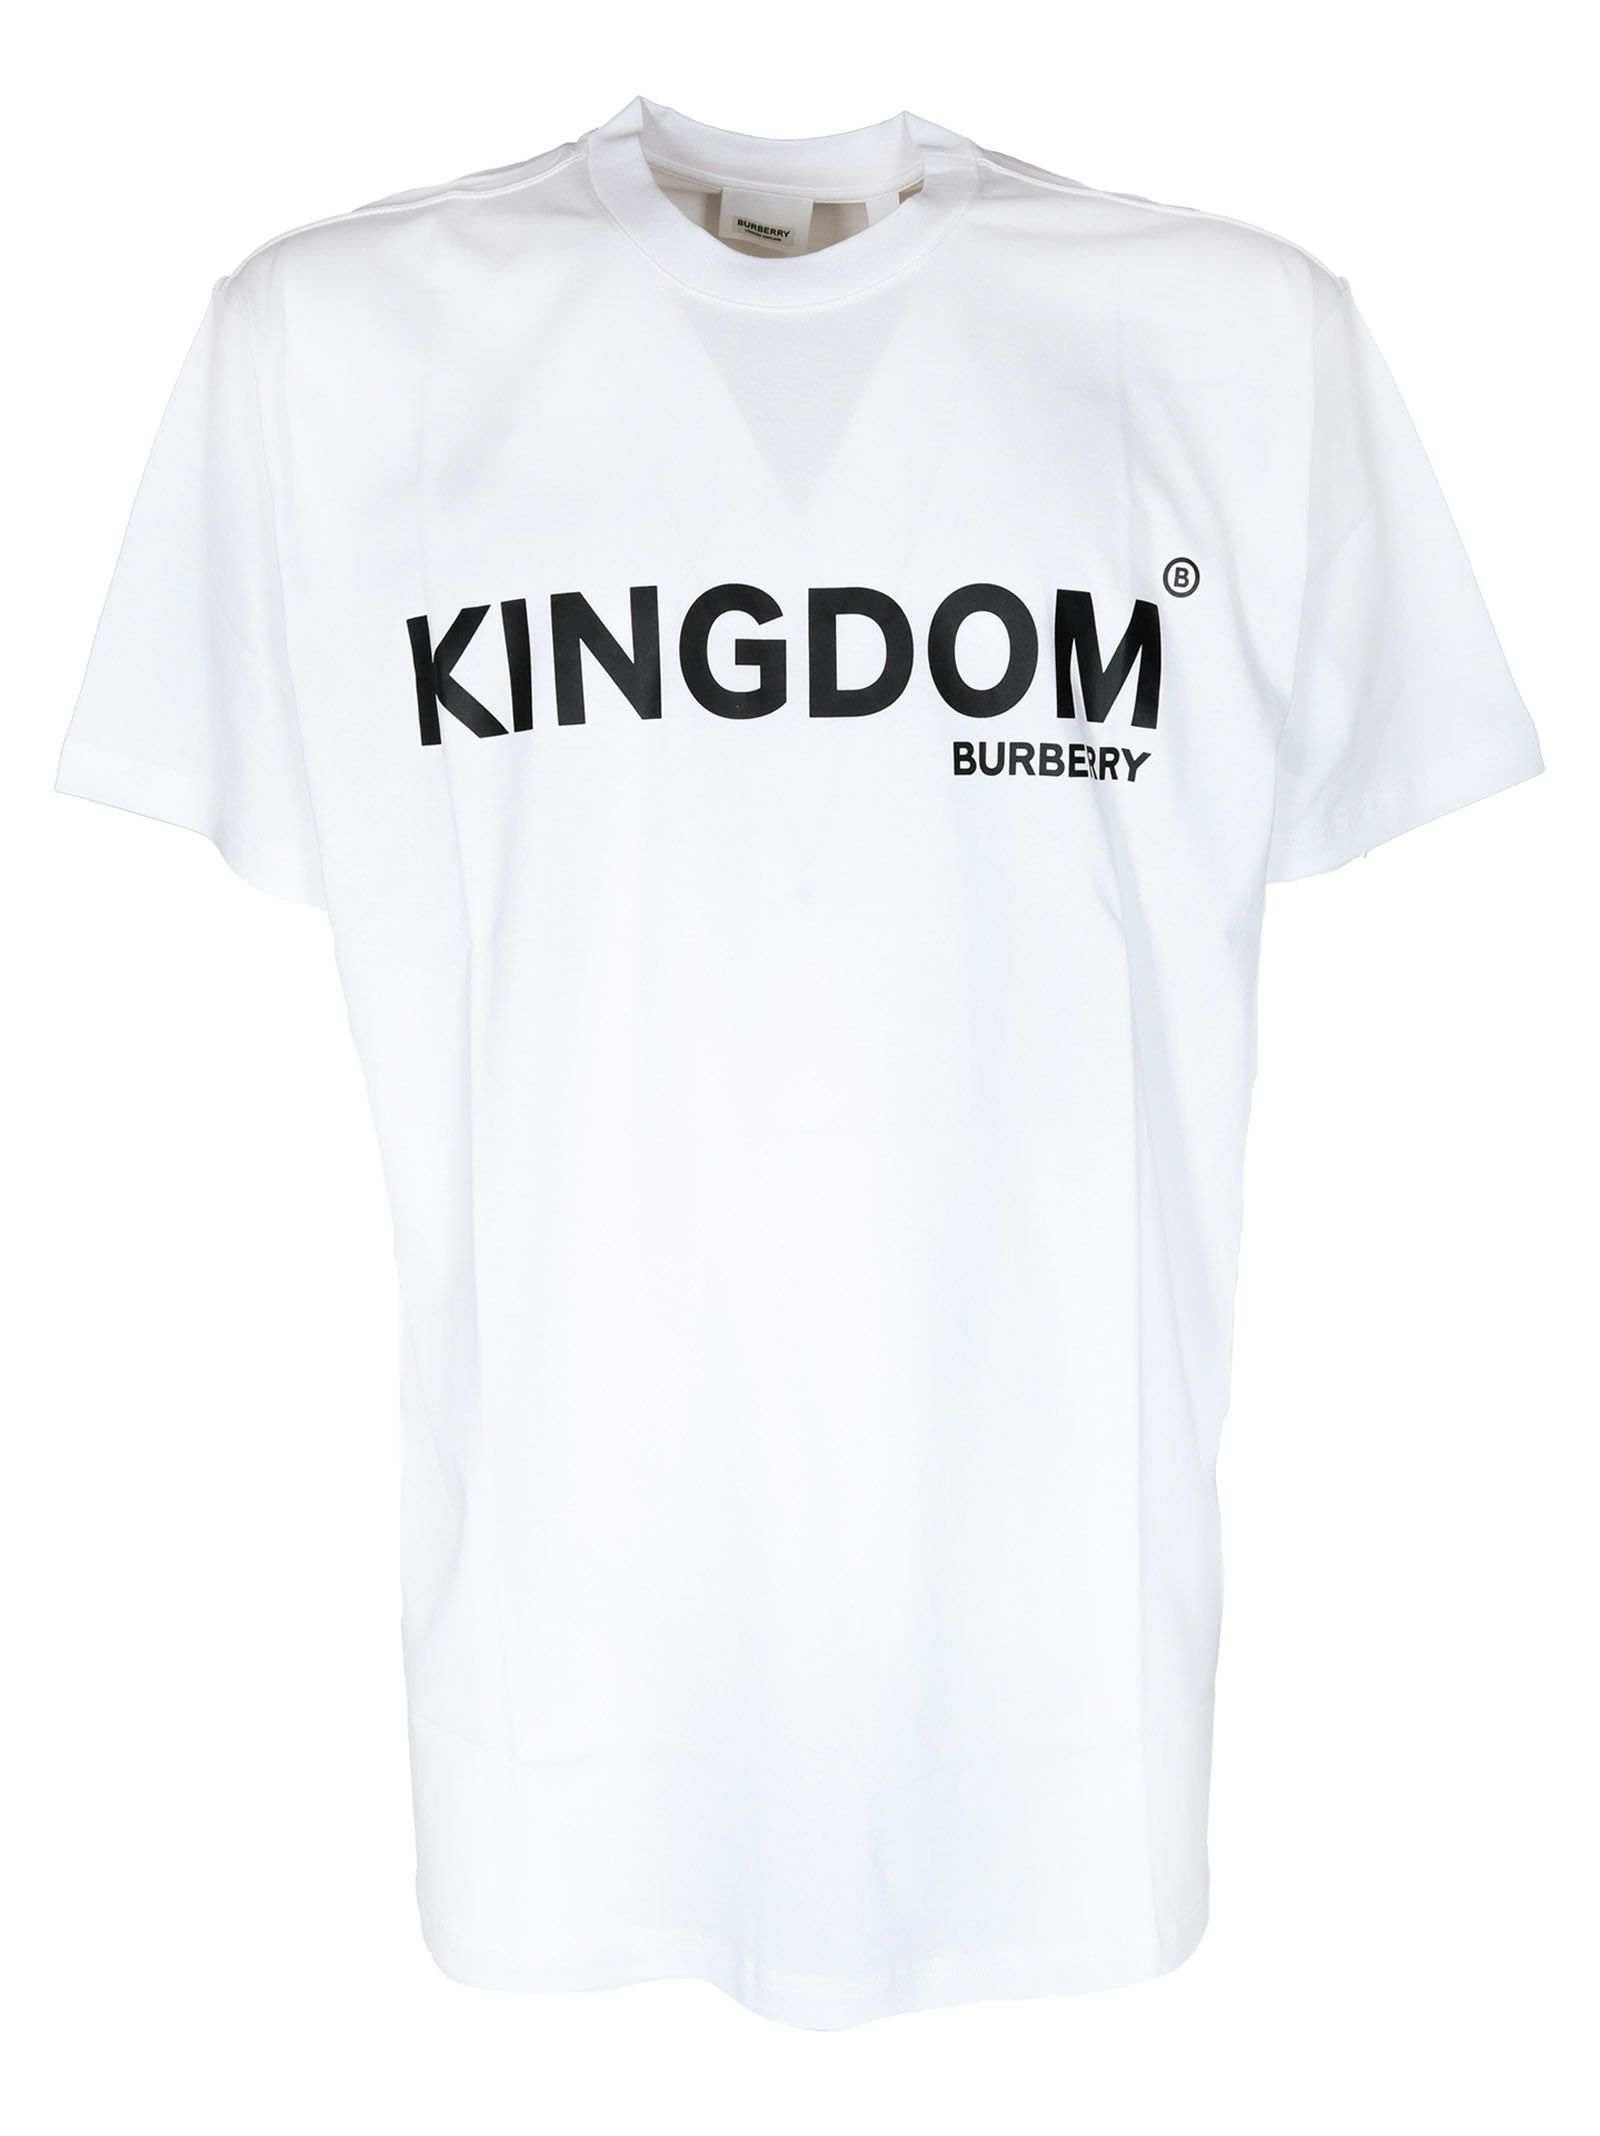 Burberry Burberry Kingdom Printed T-shirt - 10935502 | italist